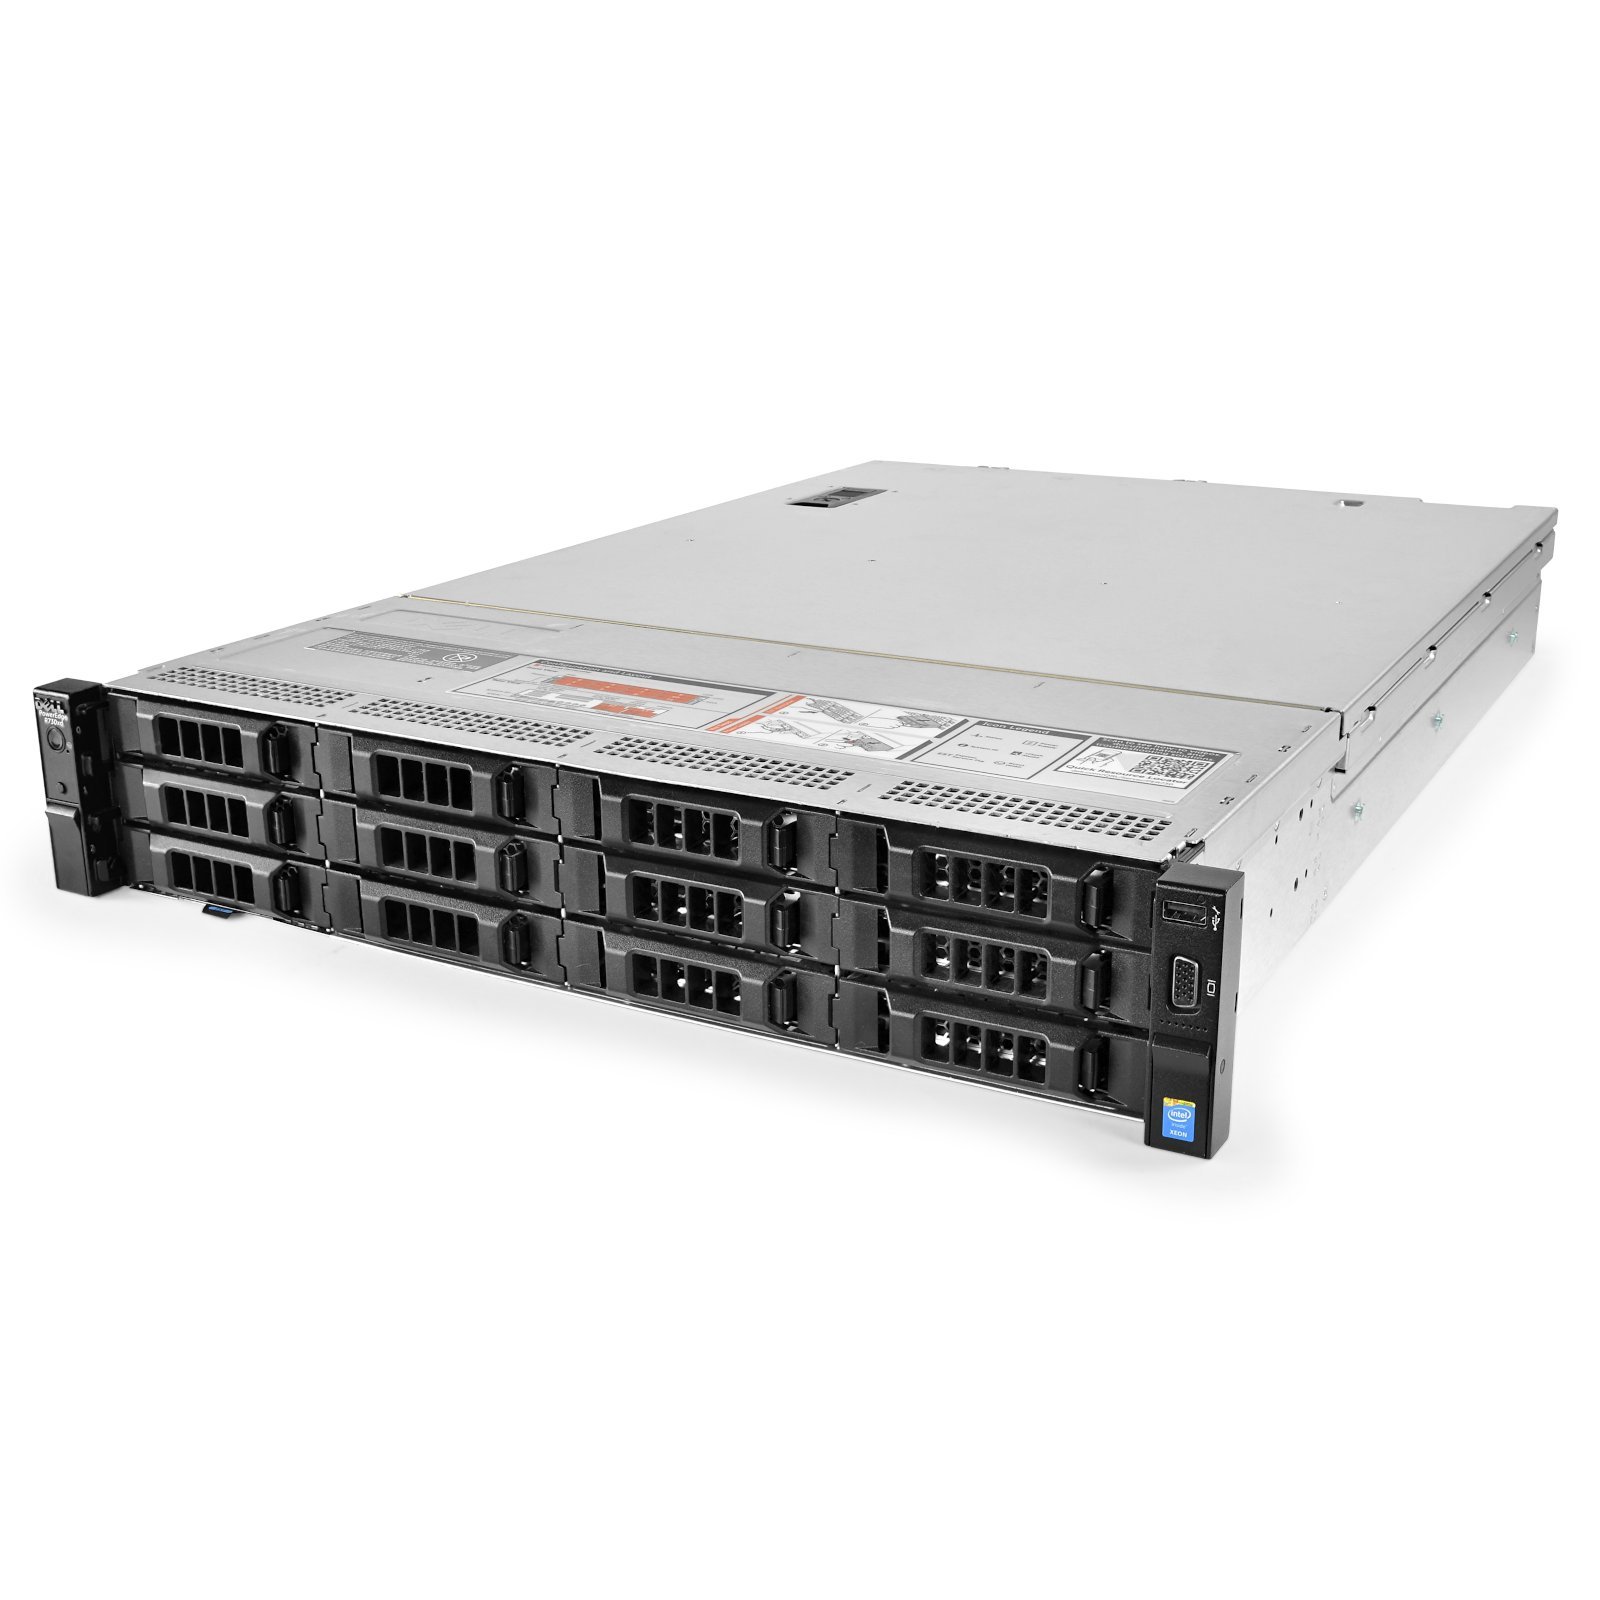 Подробное фото Сервер DELL PowerEdge R730XD Xeon 2x E5-2620v3 64Gb 2133P DDR4 12x noHDD 3.5", SAS RAID Perc H730 mini, 1024Mb, 2*PSU 750W